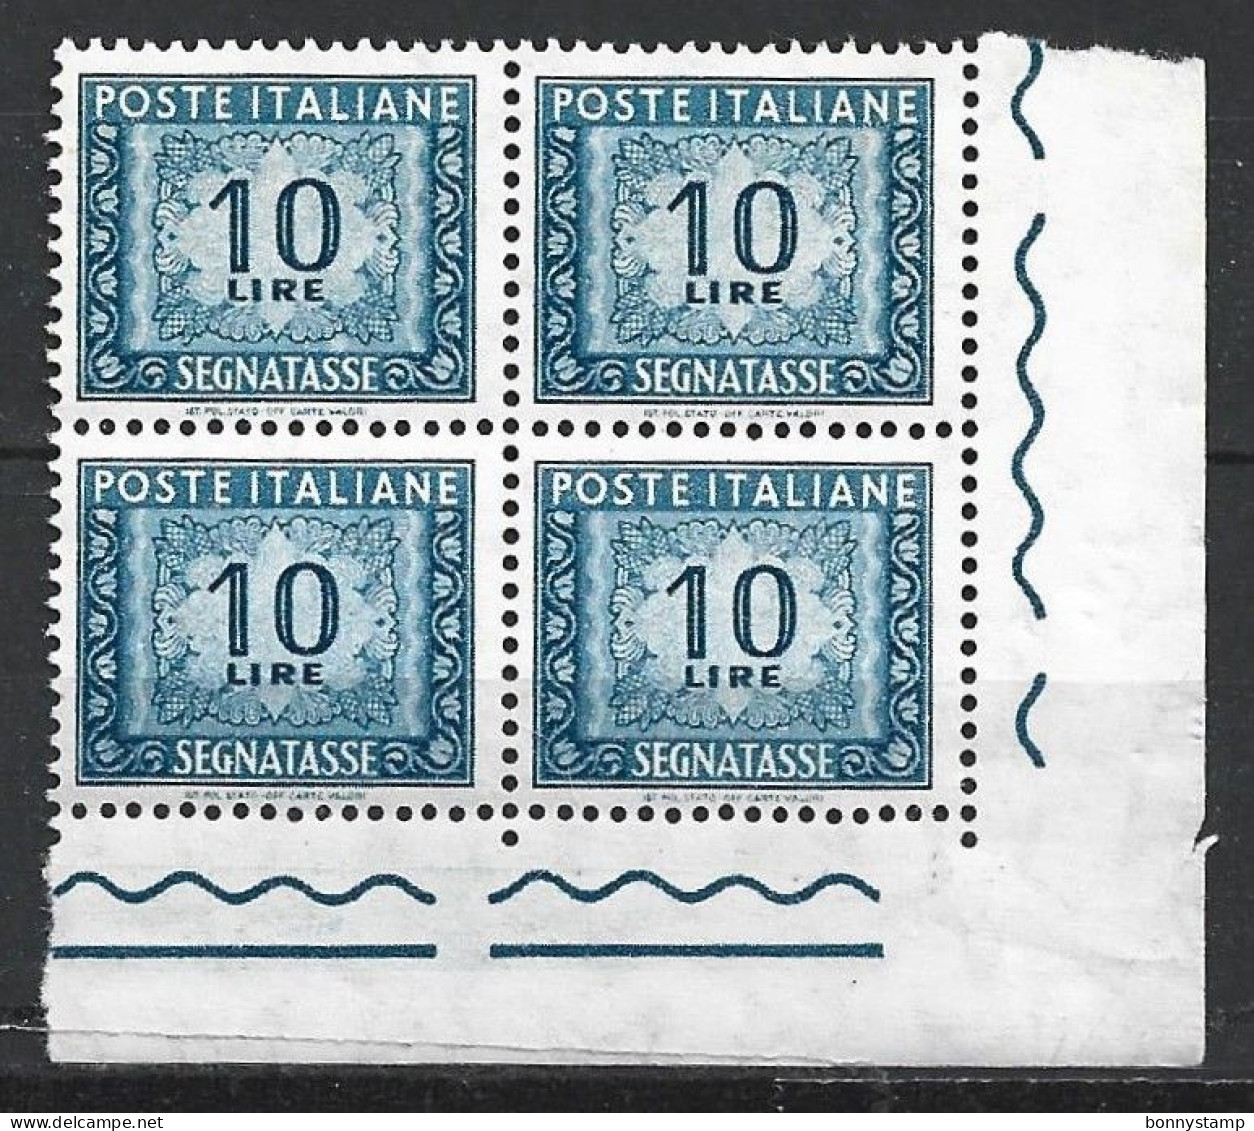 Repubblica Italiana, 1955/66 - 10 Lire Segnatasse, Fil. Stelle, Quartina - Nr.113 MNH** - Postage Due